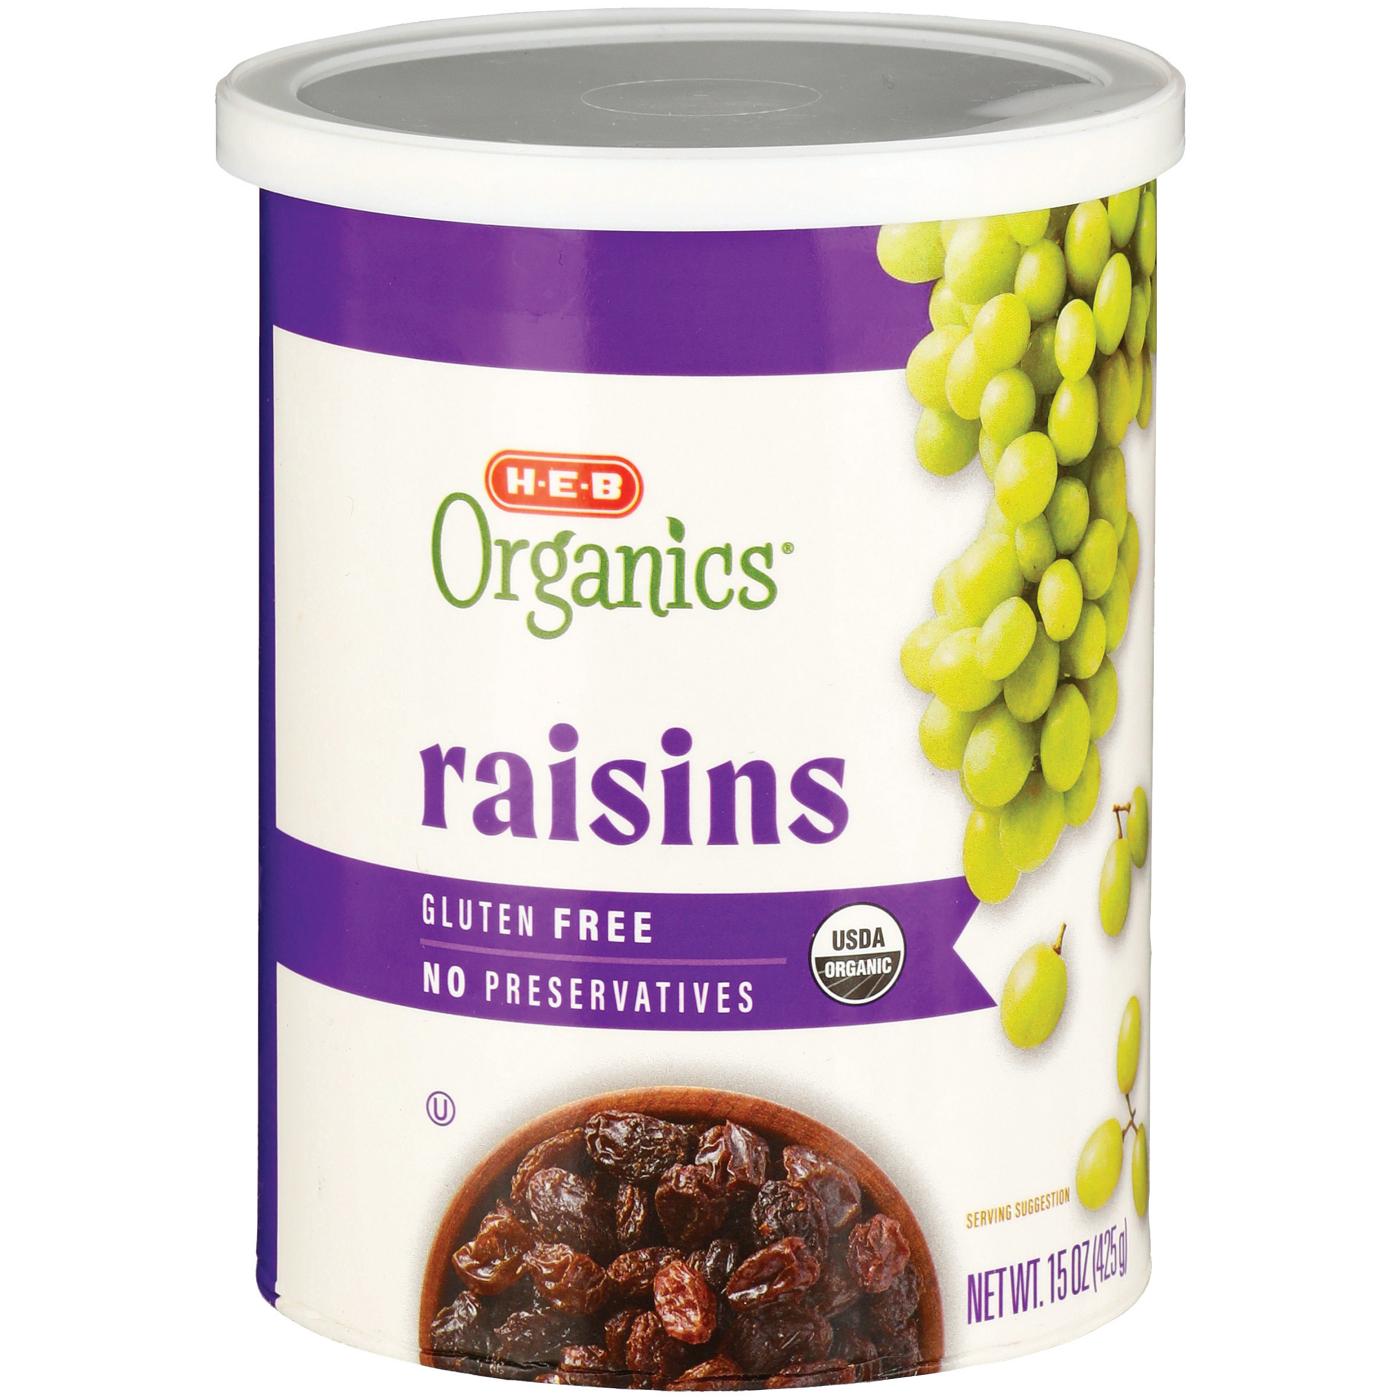 H-E-B Organics Raisins; image 1 of 2